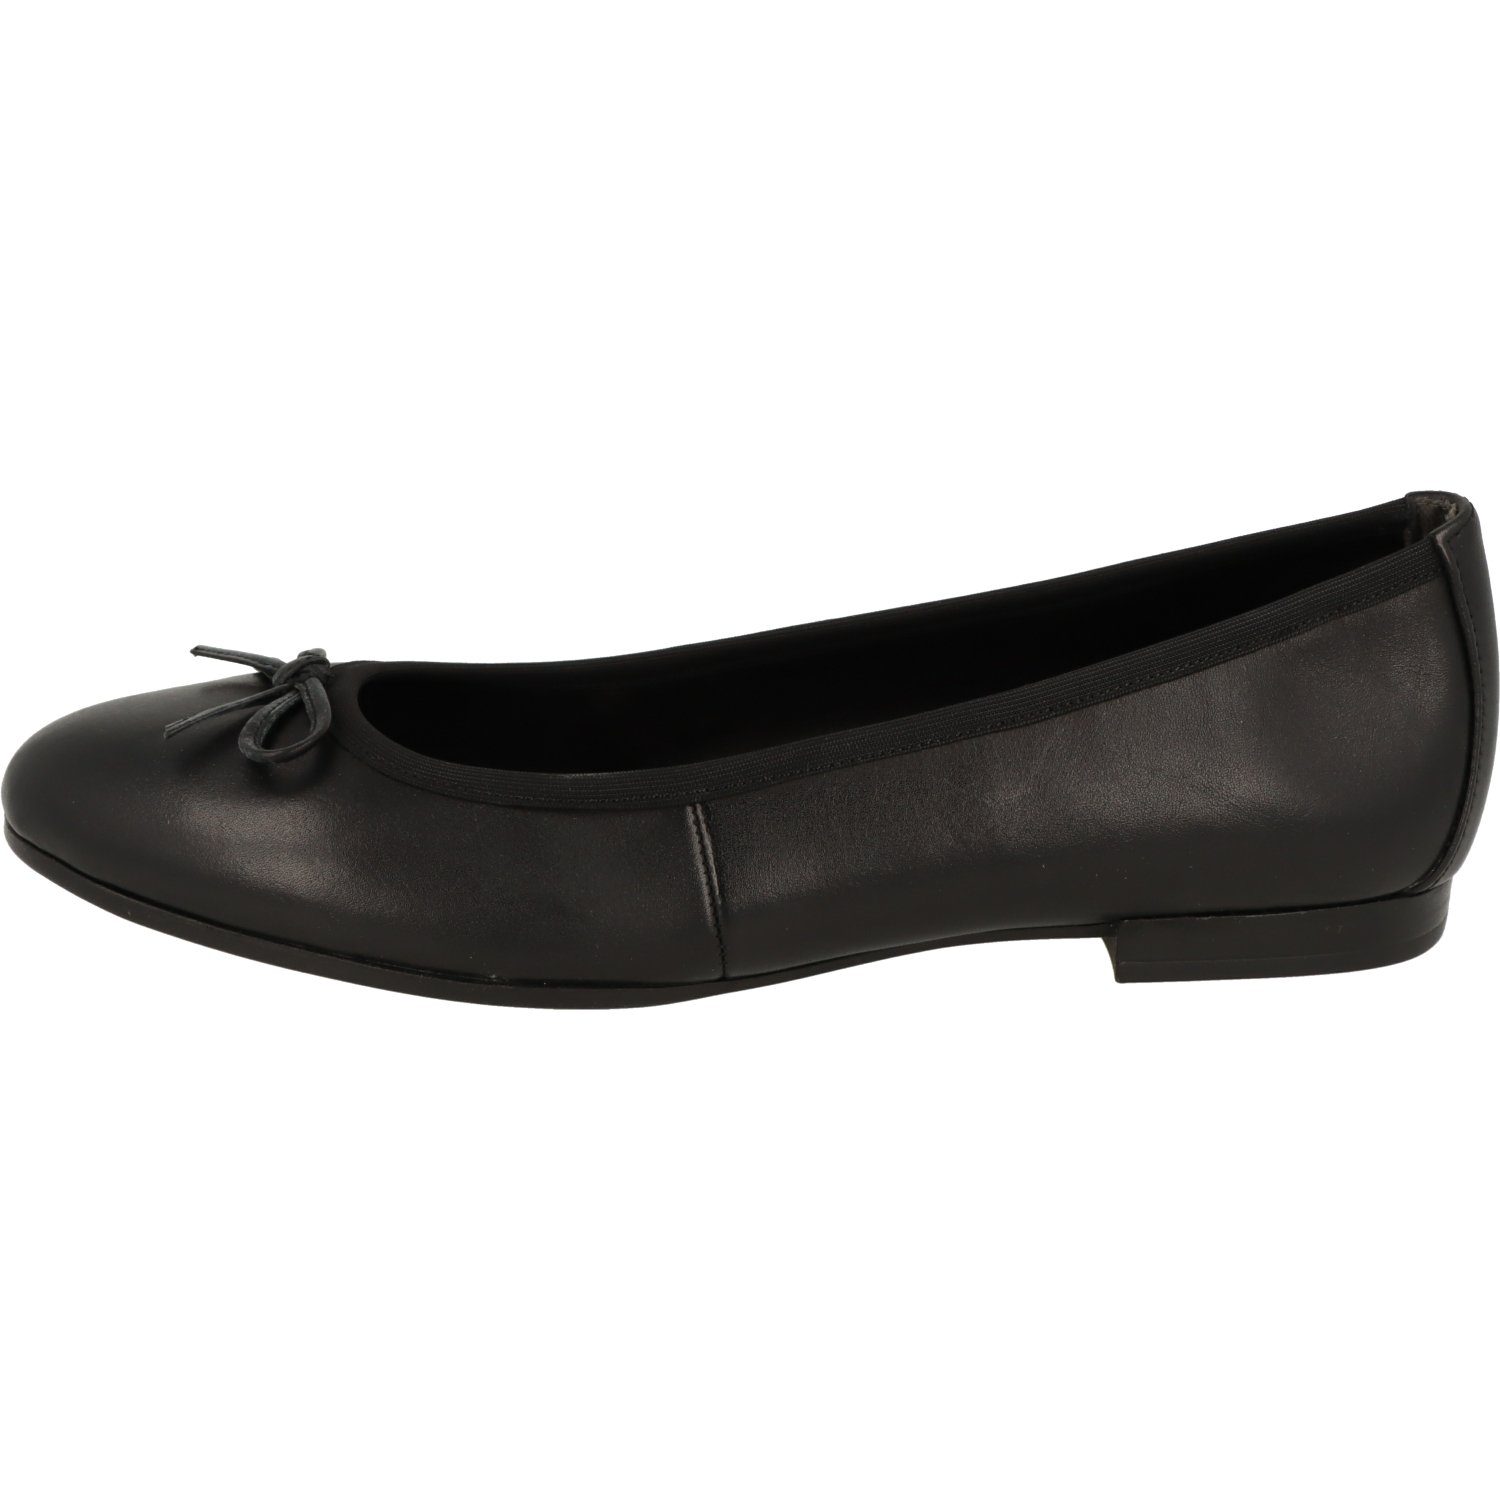 Tamaris 1-22116-20 Damen Schuhe Schleife Ballerina mit Black Leder Ballerinas